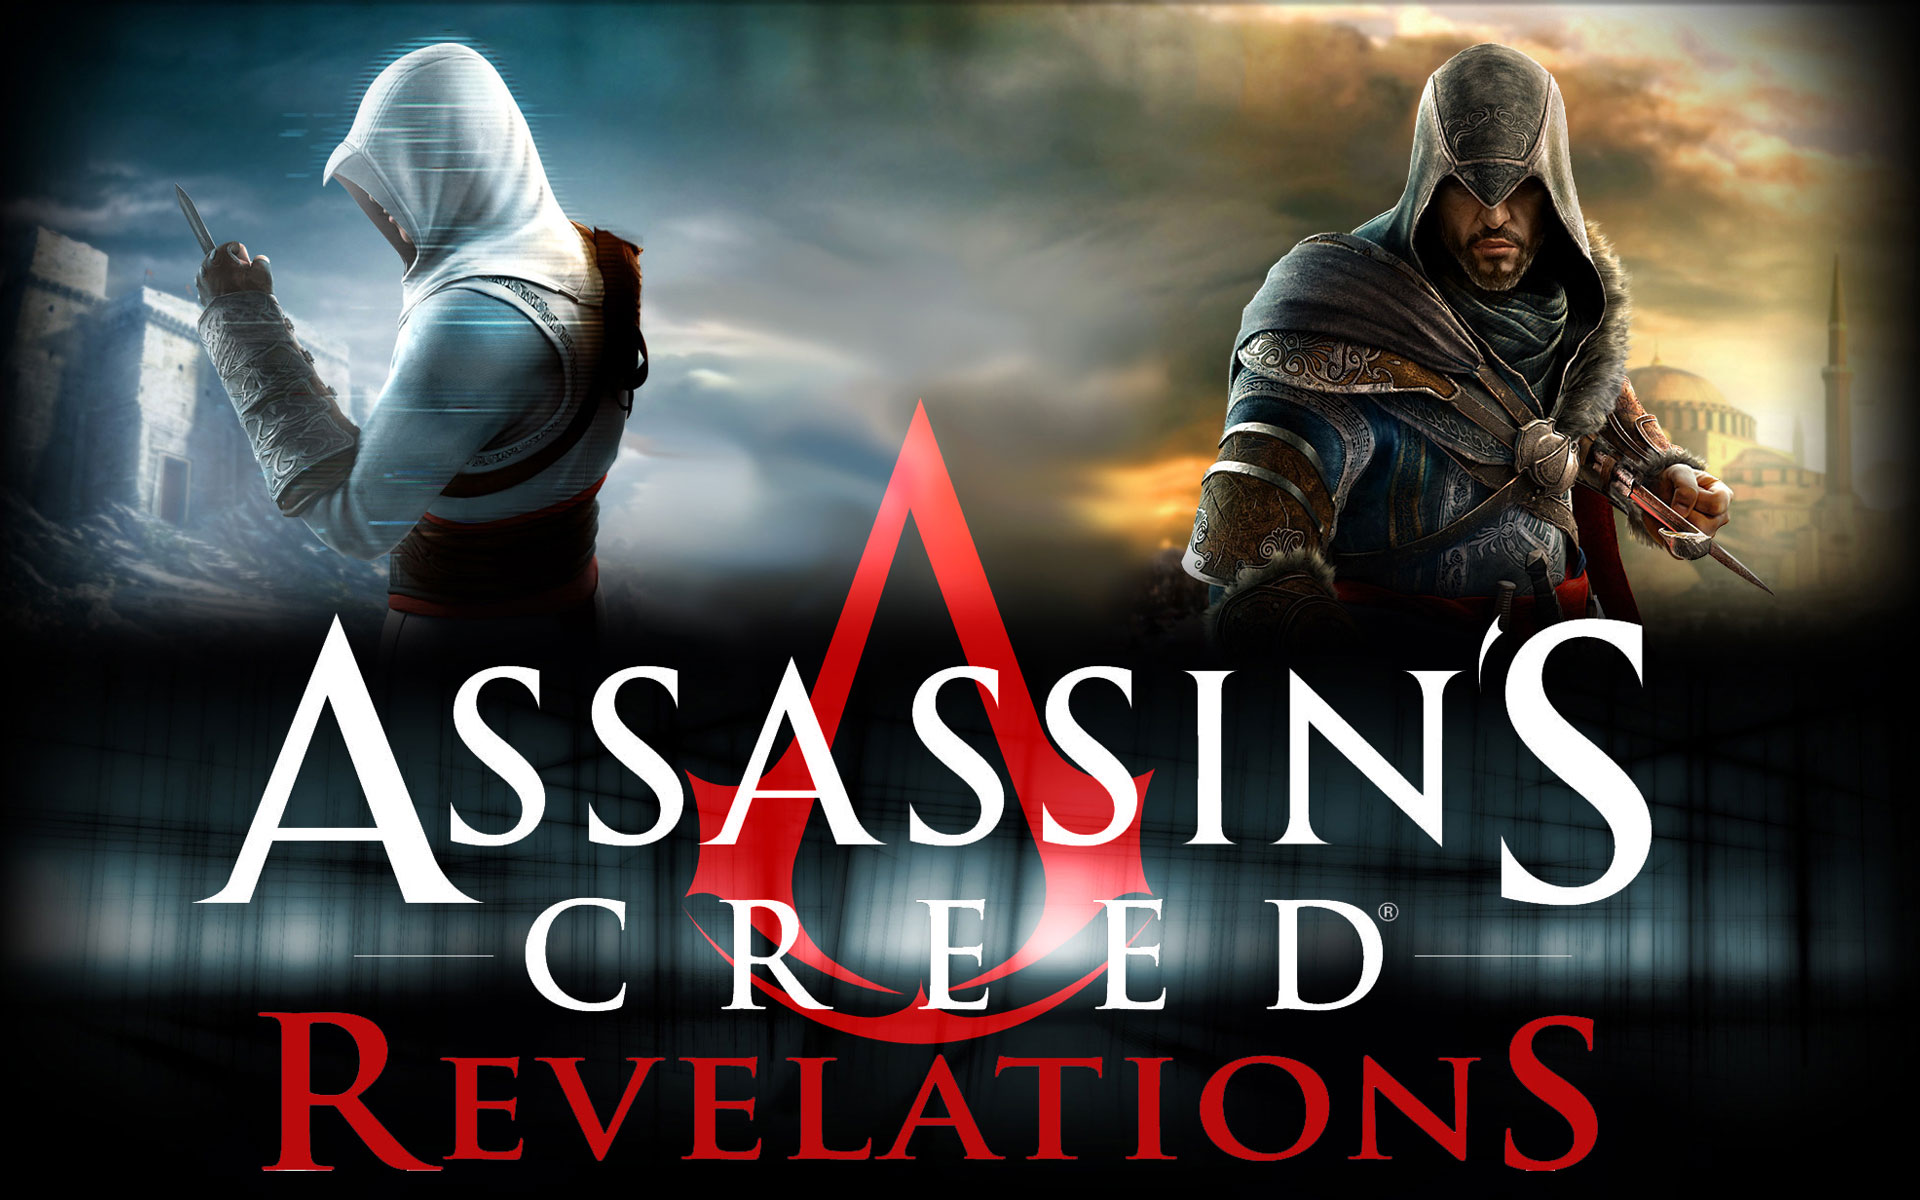 Guide E Trucchi Per Assassin S Creed Revelations Guidegeek